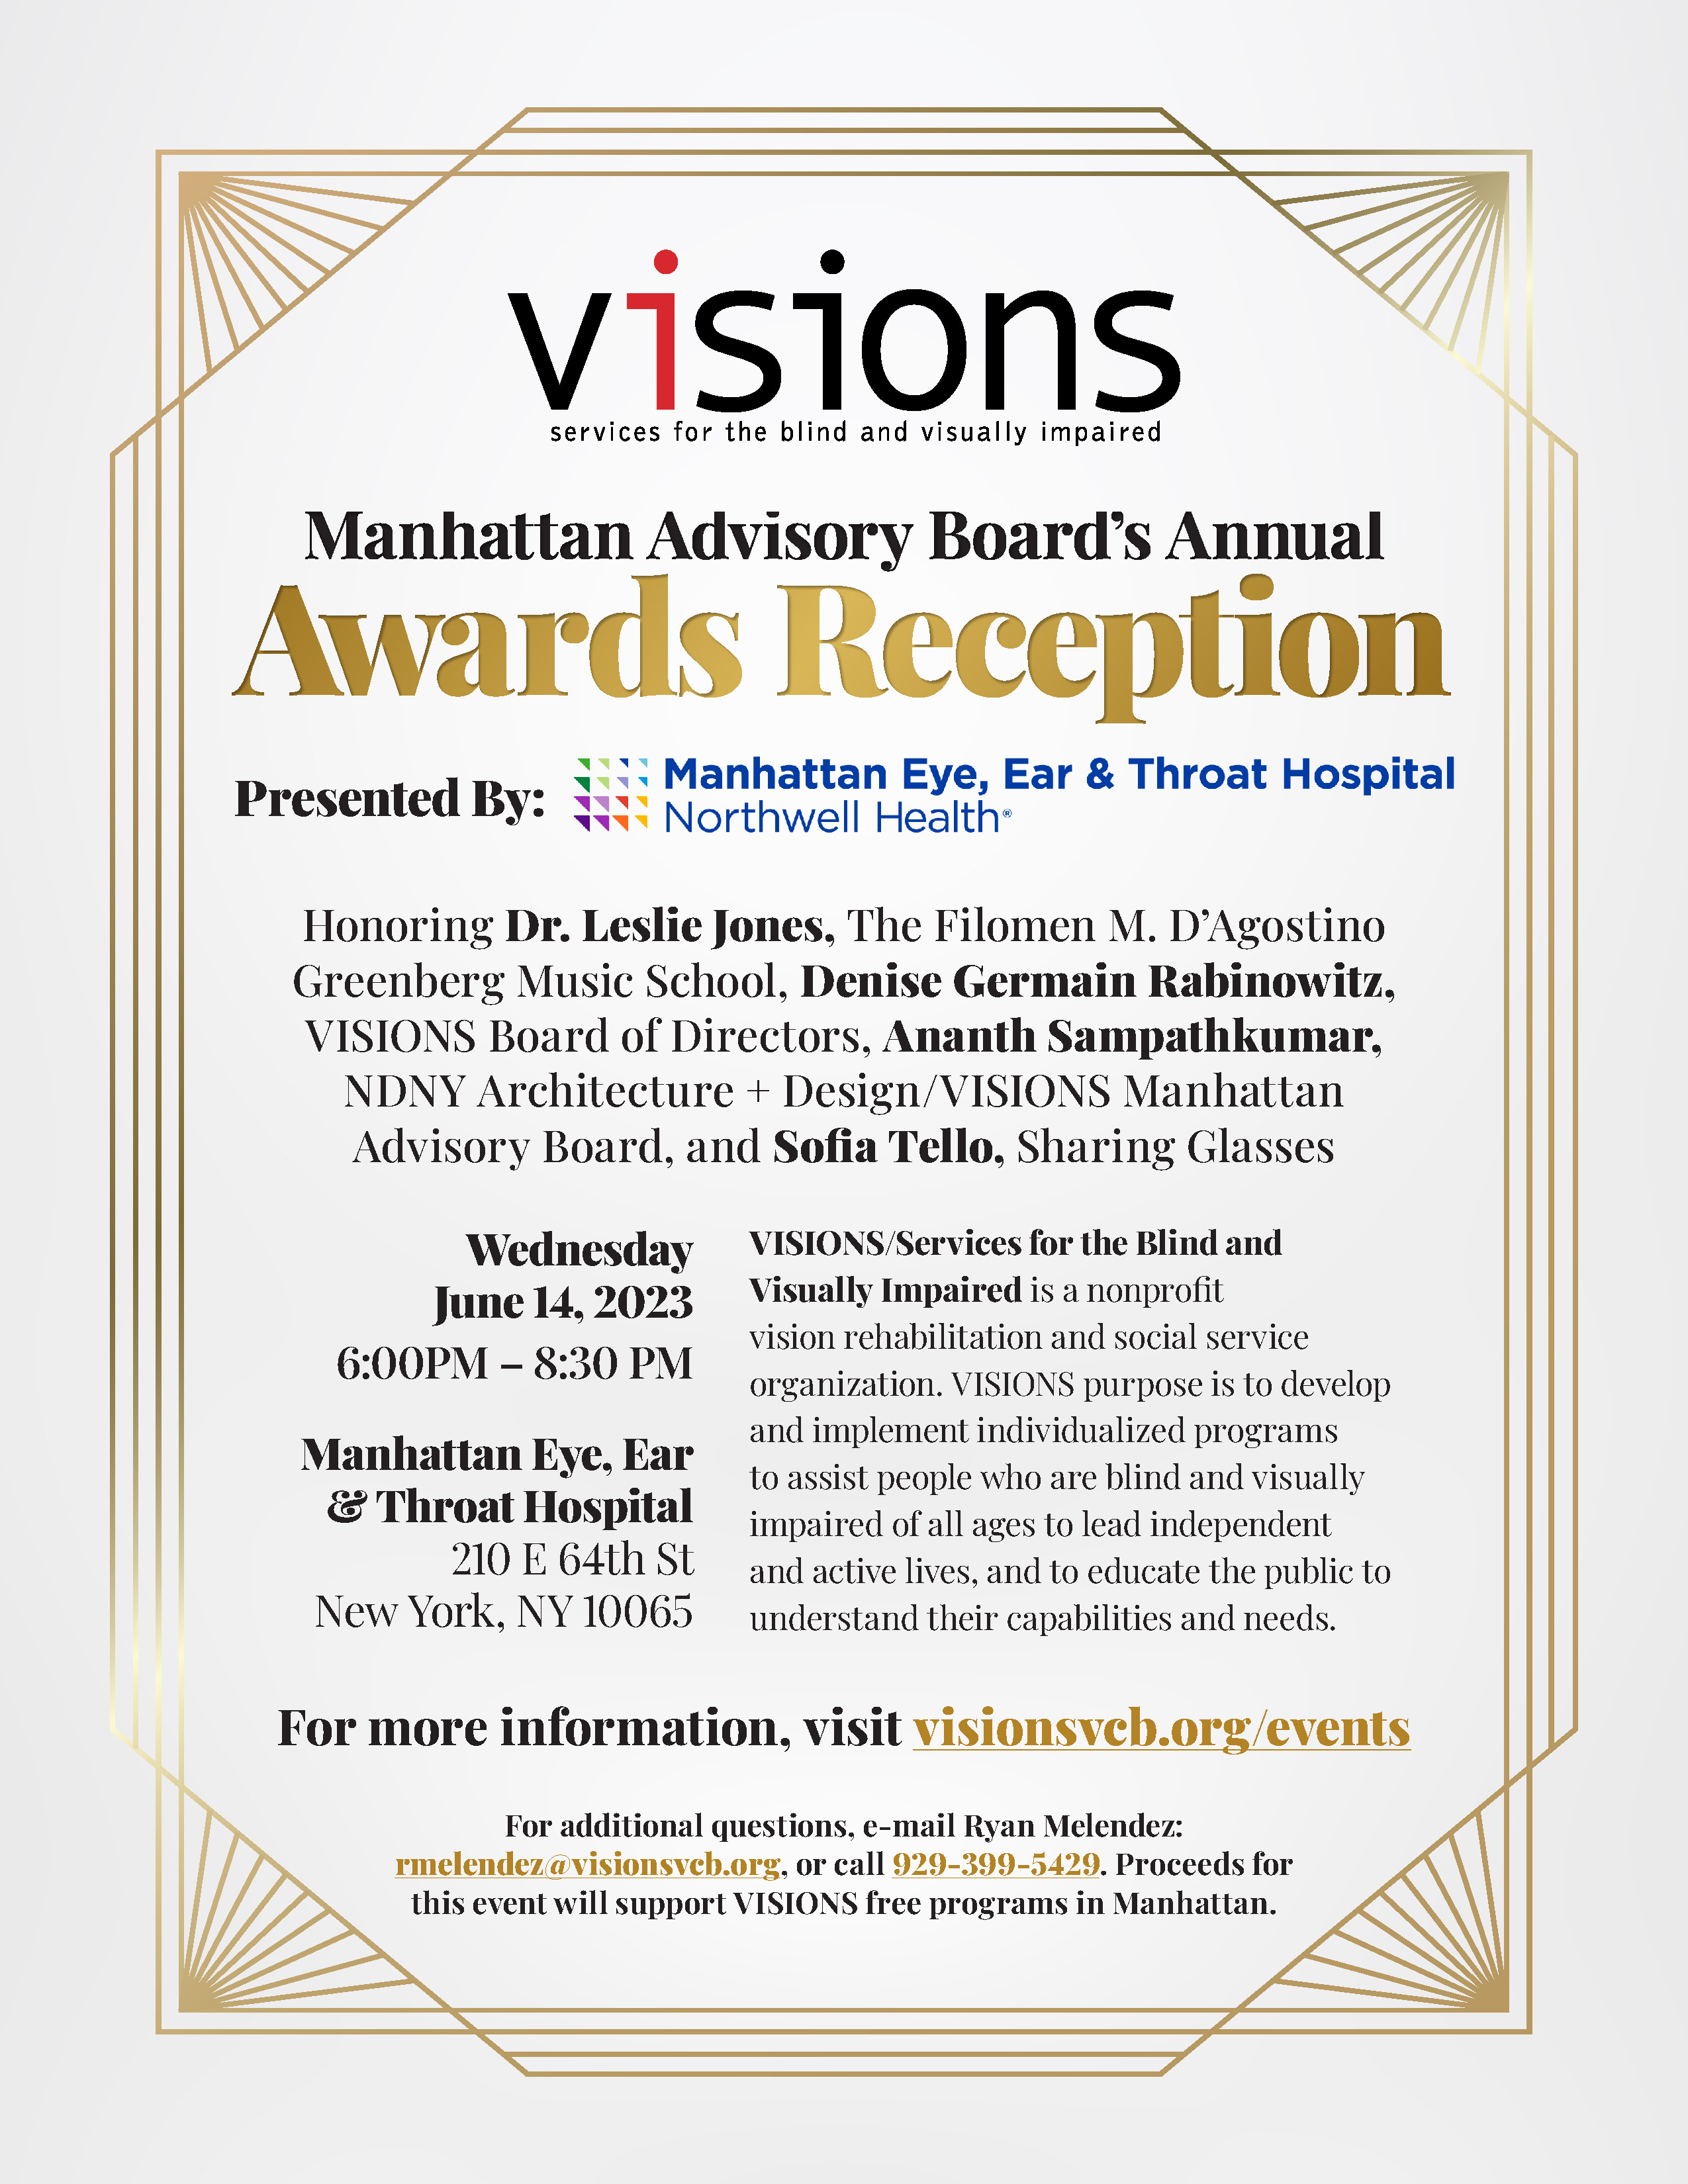 VISIONS Manhattan Advisory Board’s Annual Awards Reception, Presented By Manhattan Eye, Ear & Throat Hosptial